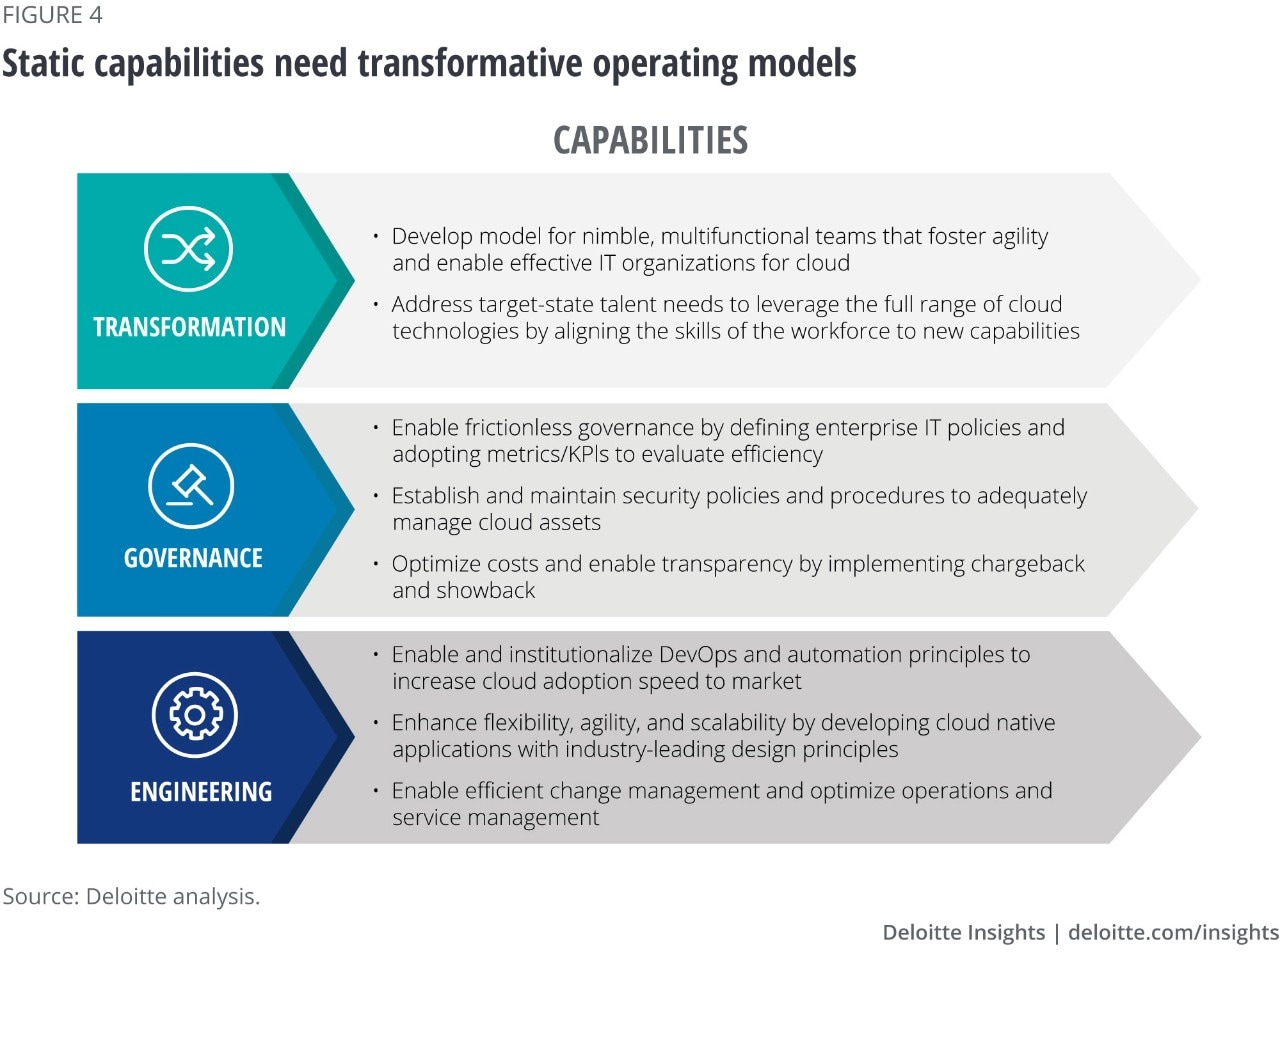 Figure 4. Static capabilities need transformative operating models